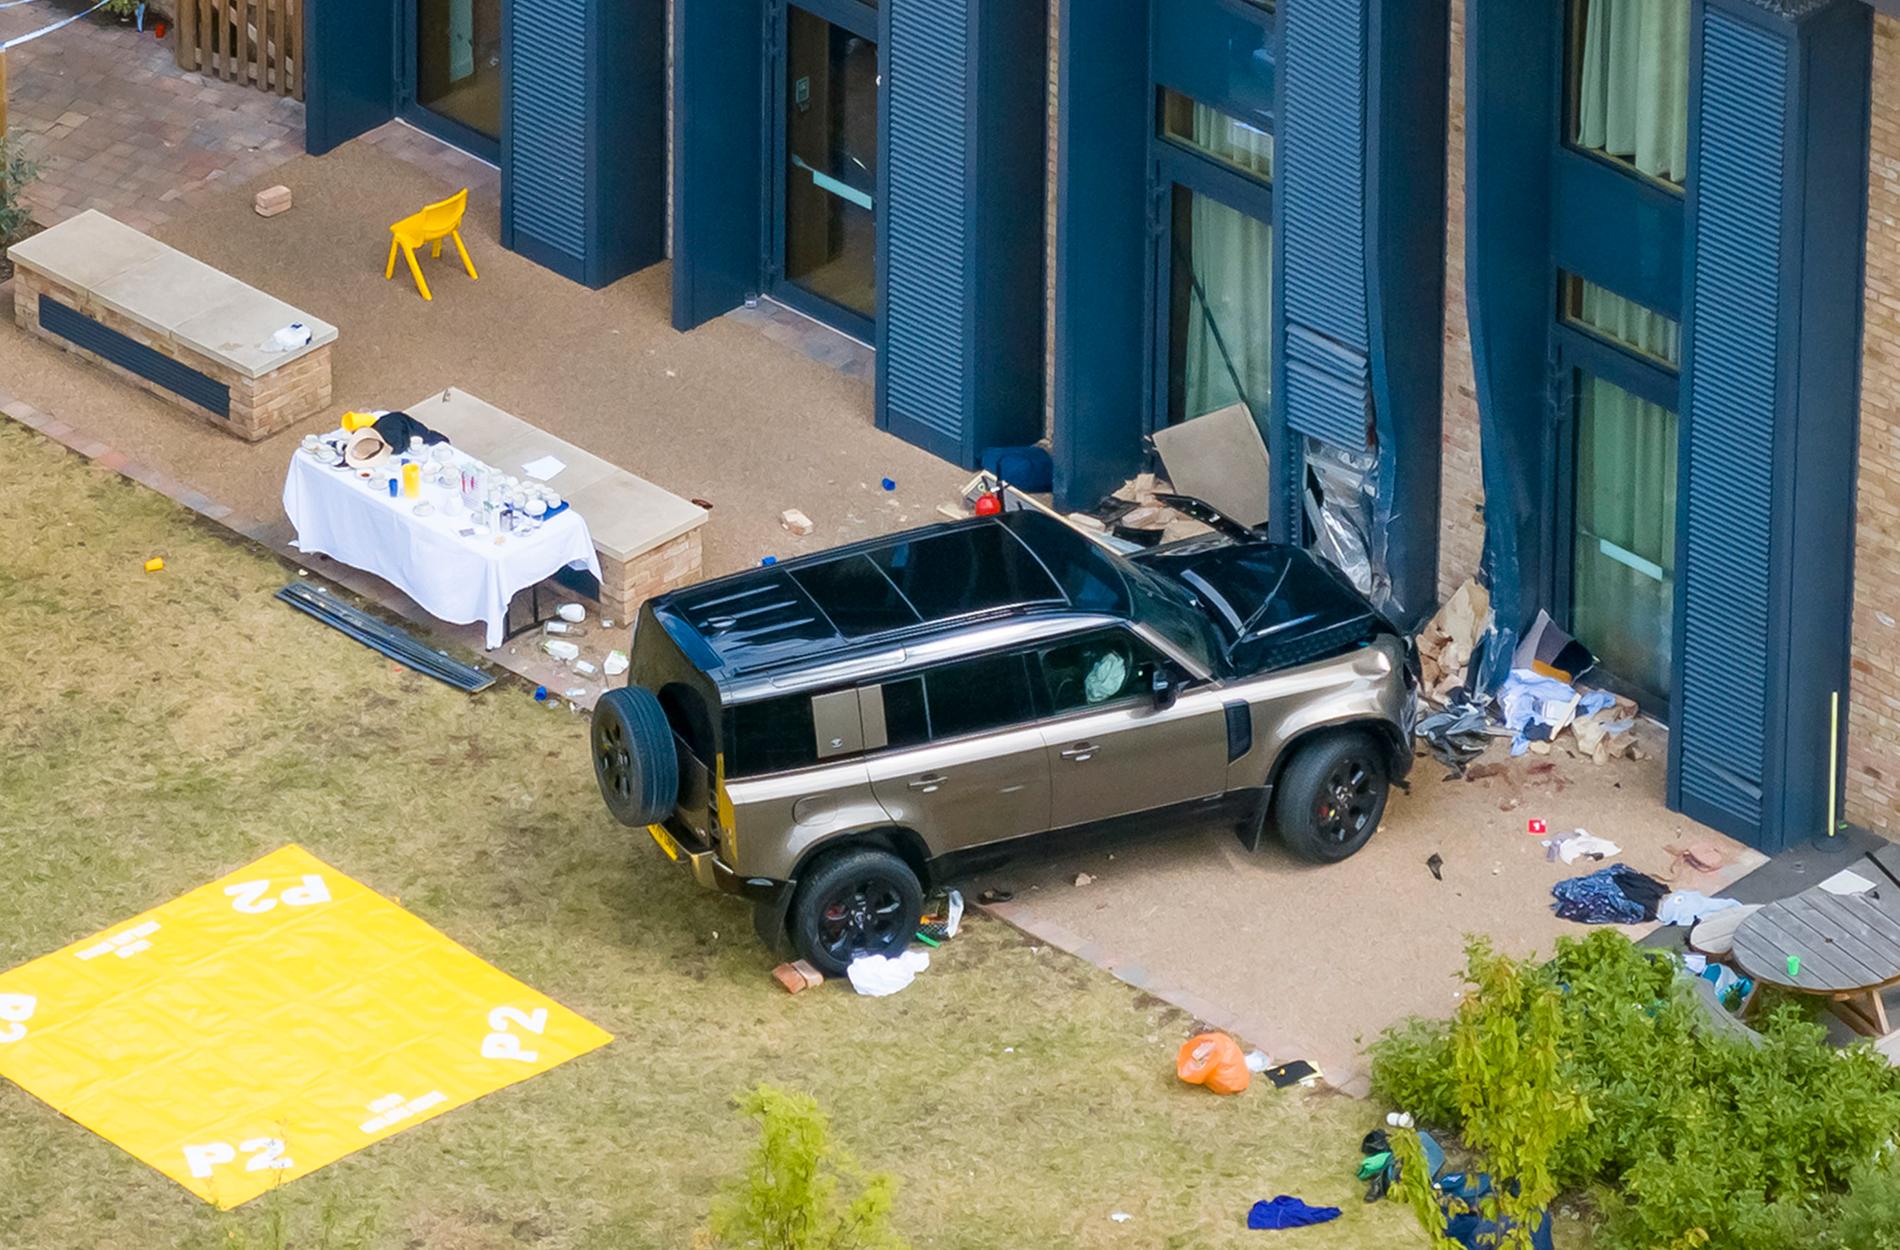 En Range Rover kraschade in i en skola i Wimbledon under torsdagen.